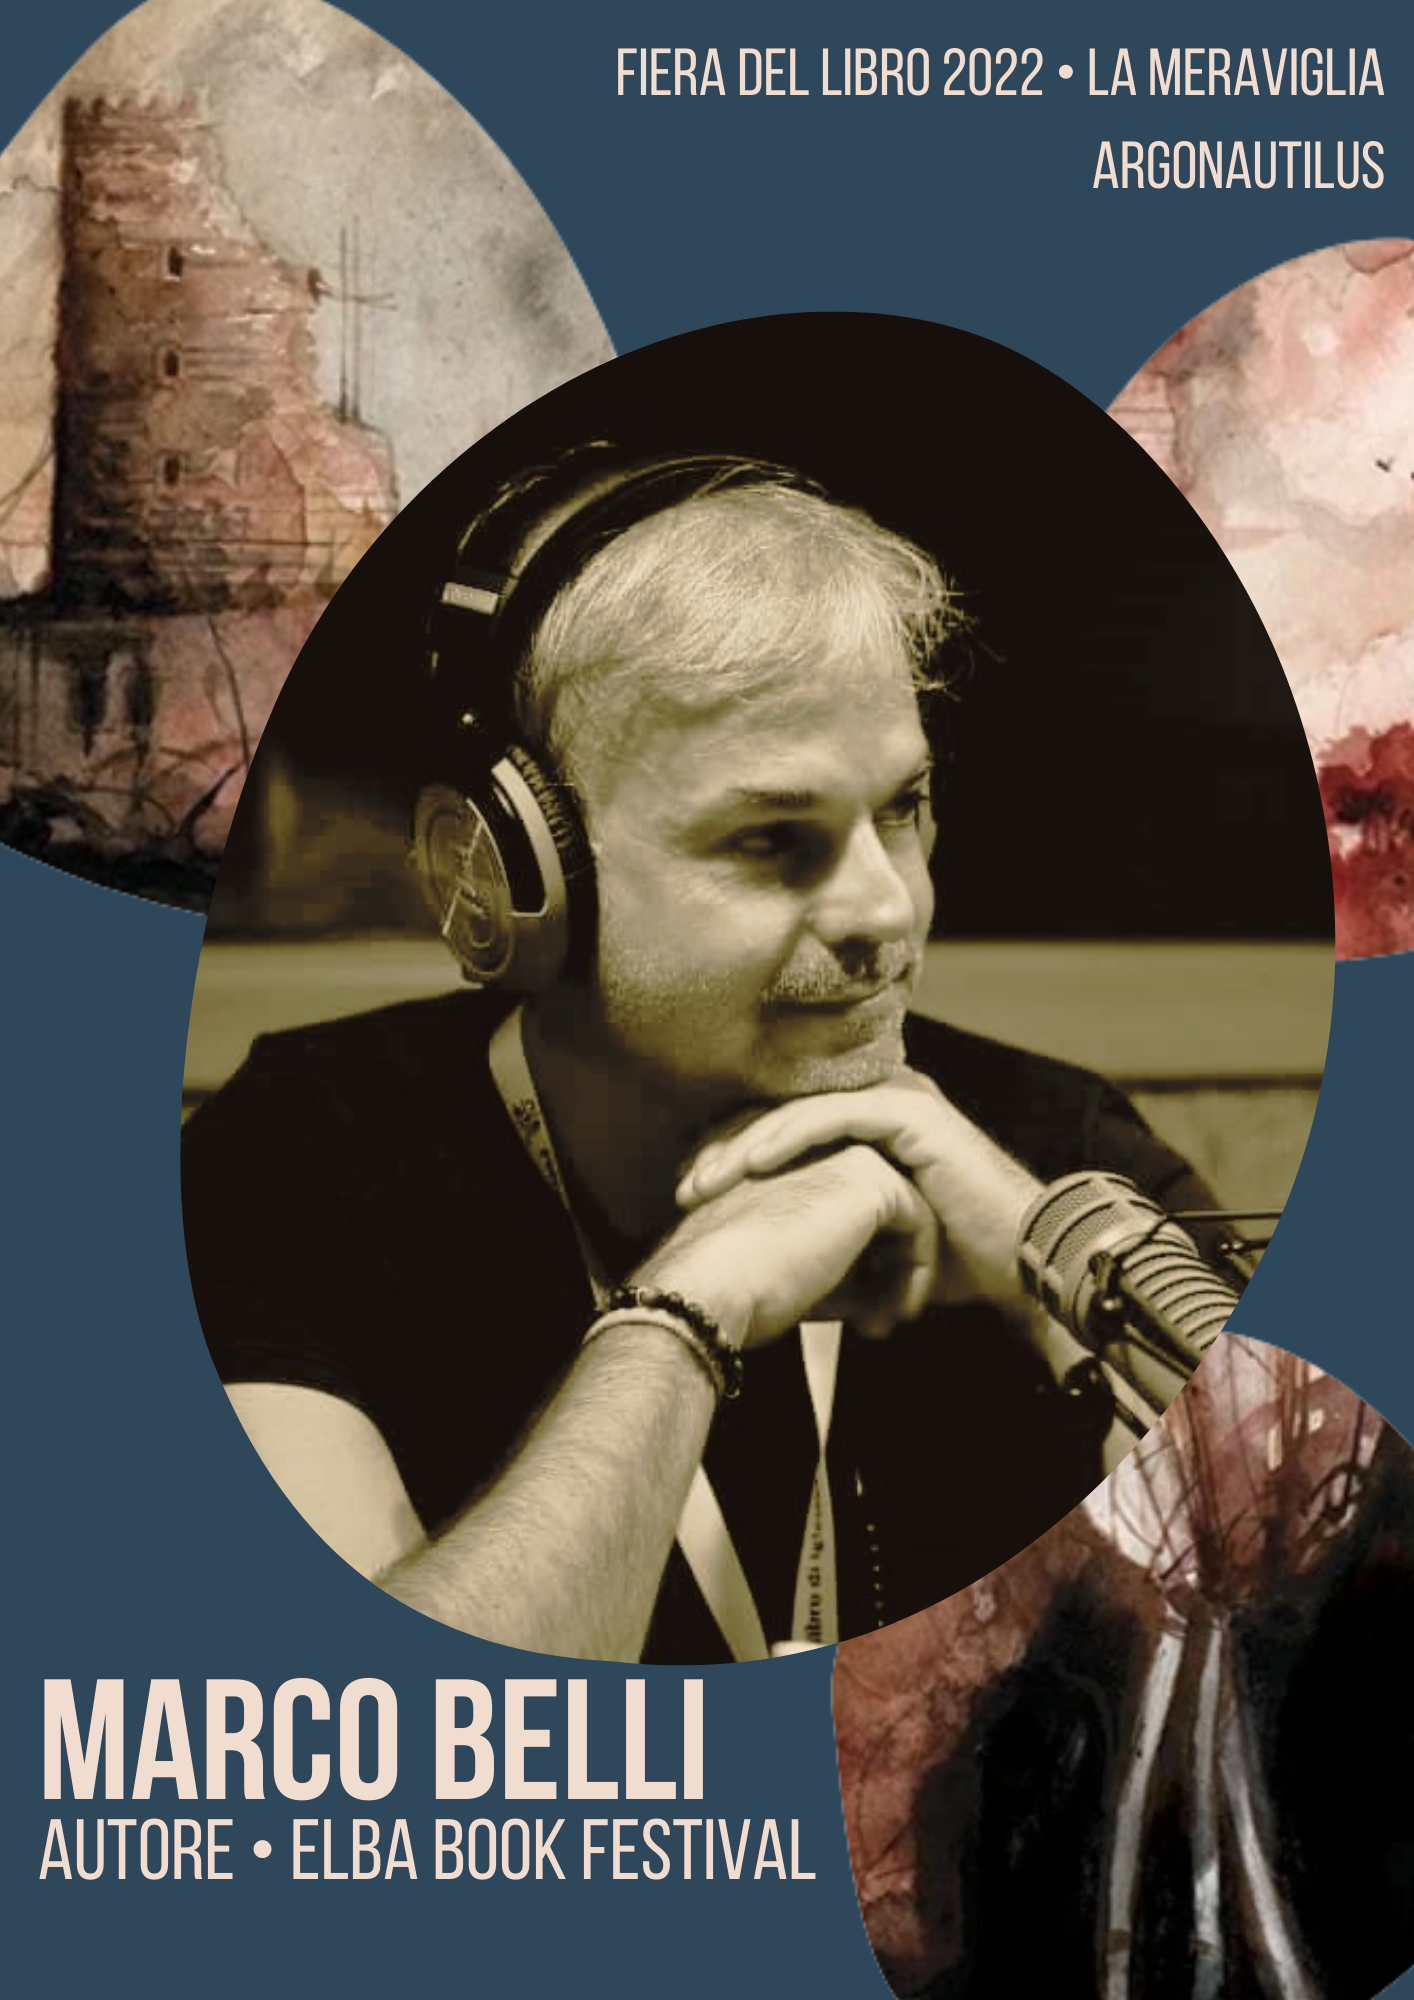 Marco Belli